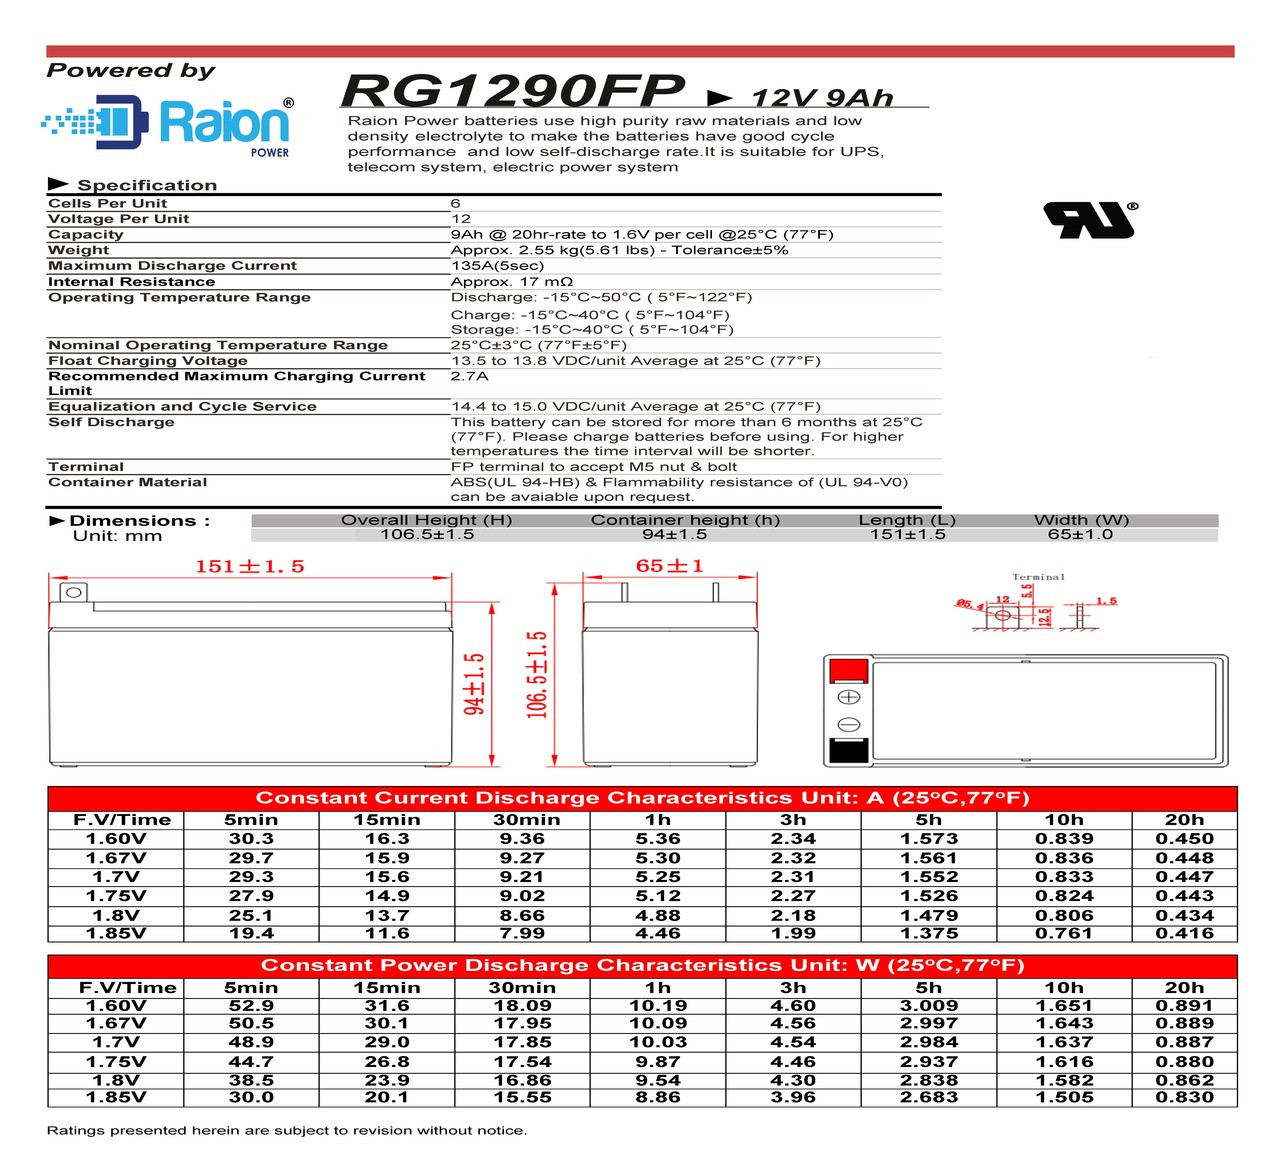 Raion Power 12V 9Ah Battery Data Sheet for NPower 40236 Ironton Portable 300A